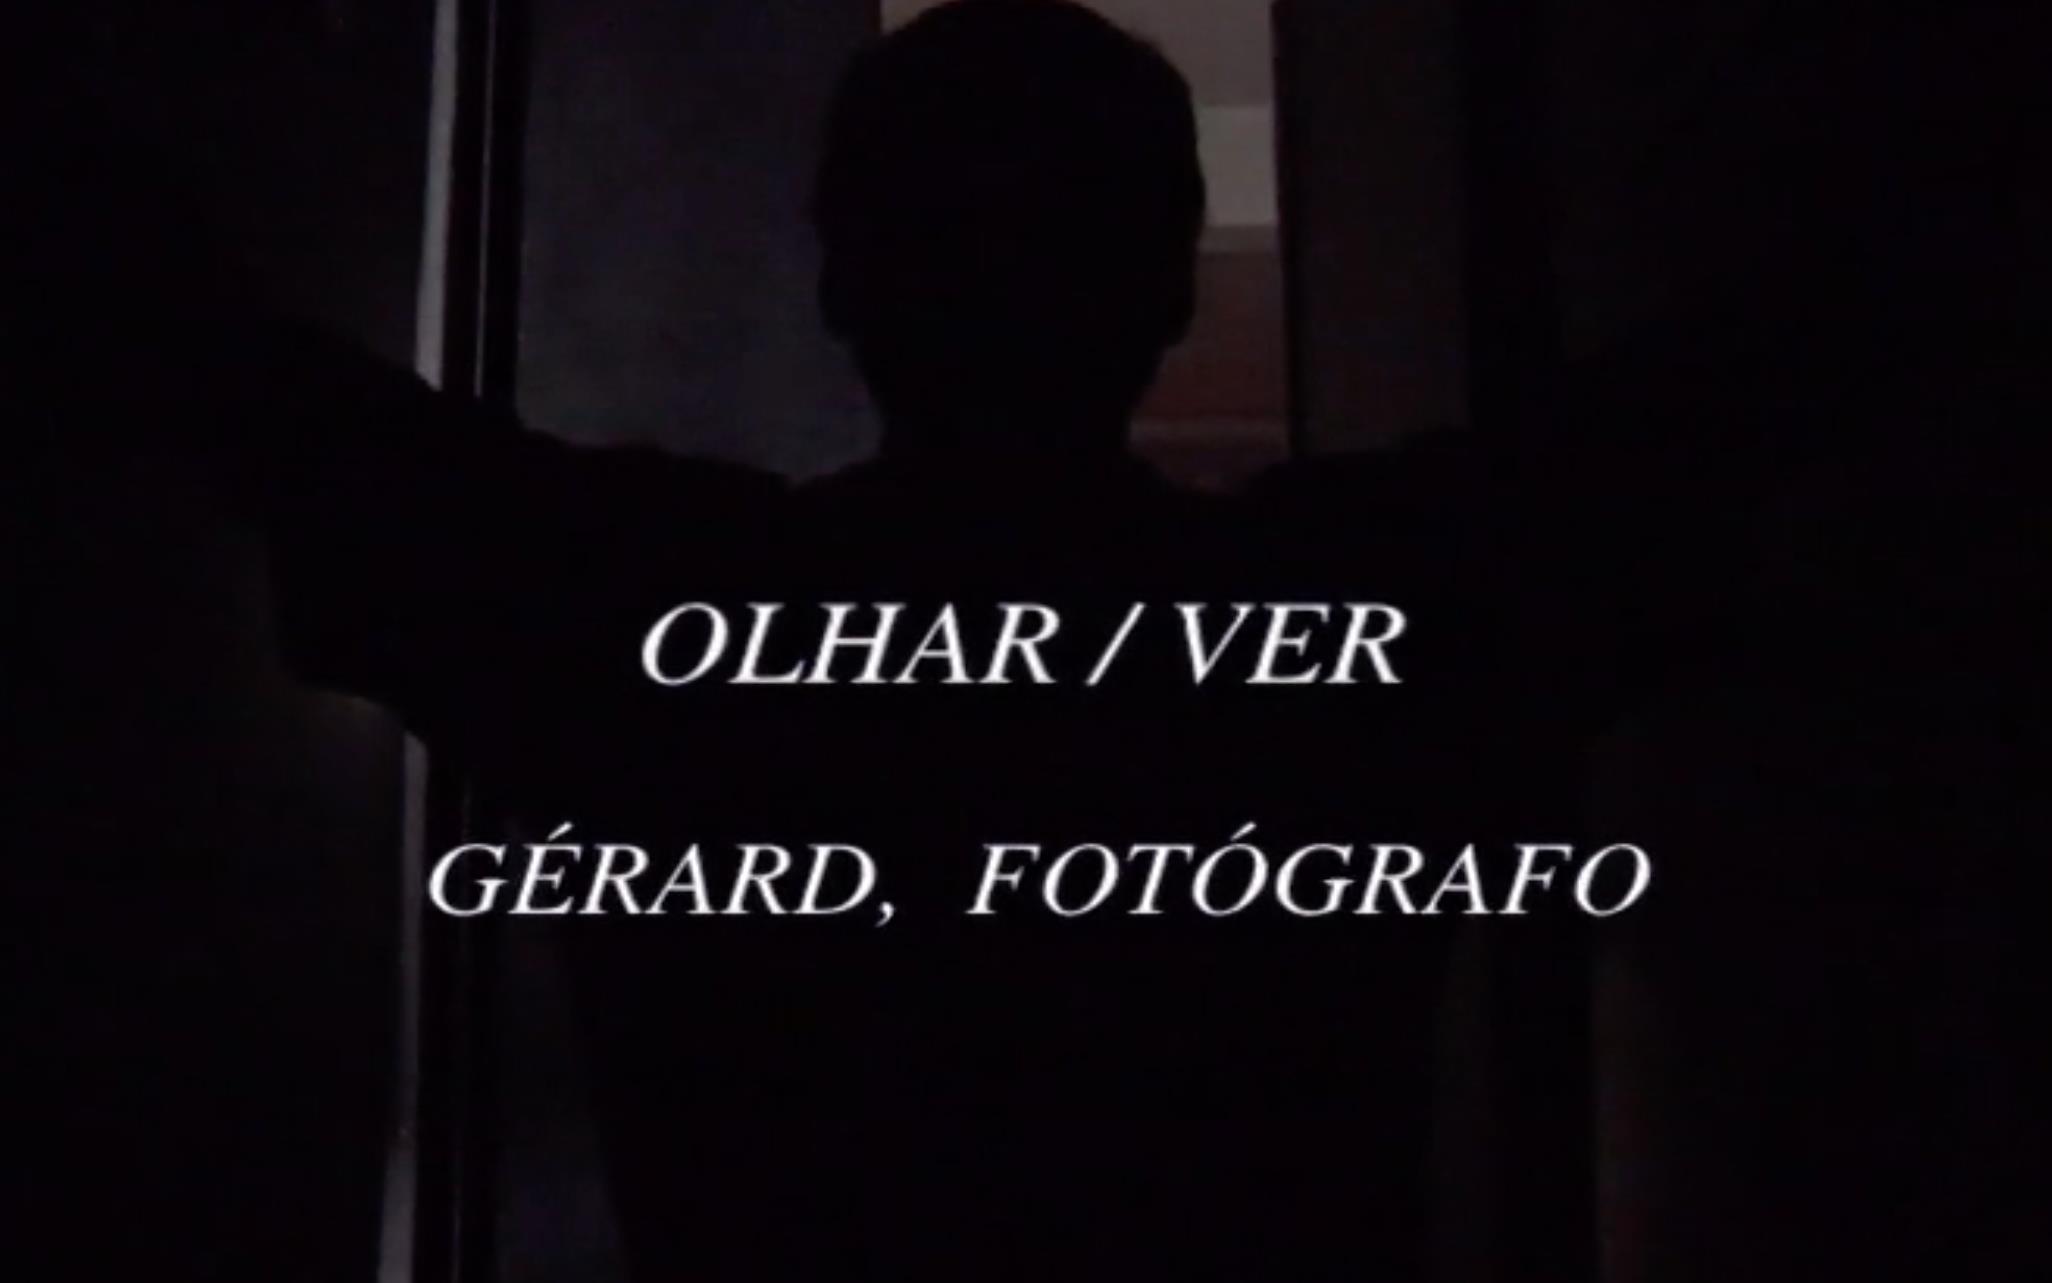 Gérard. Fotógrafo